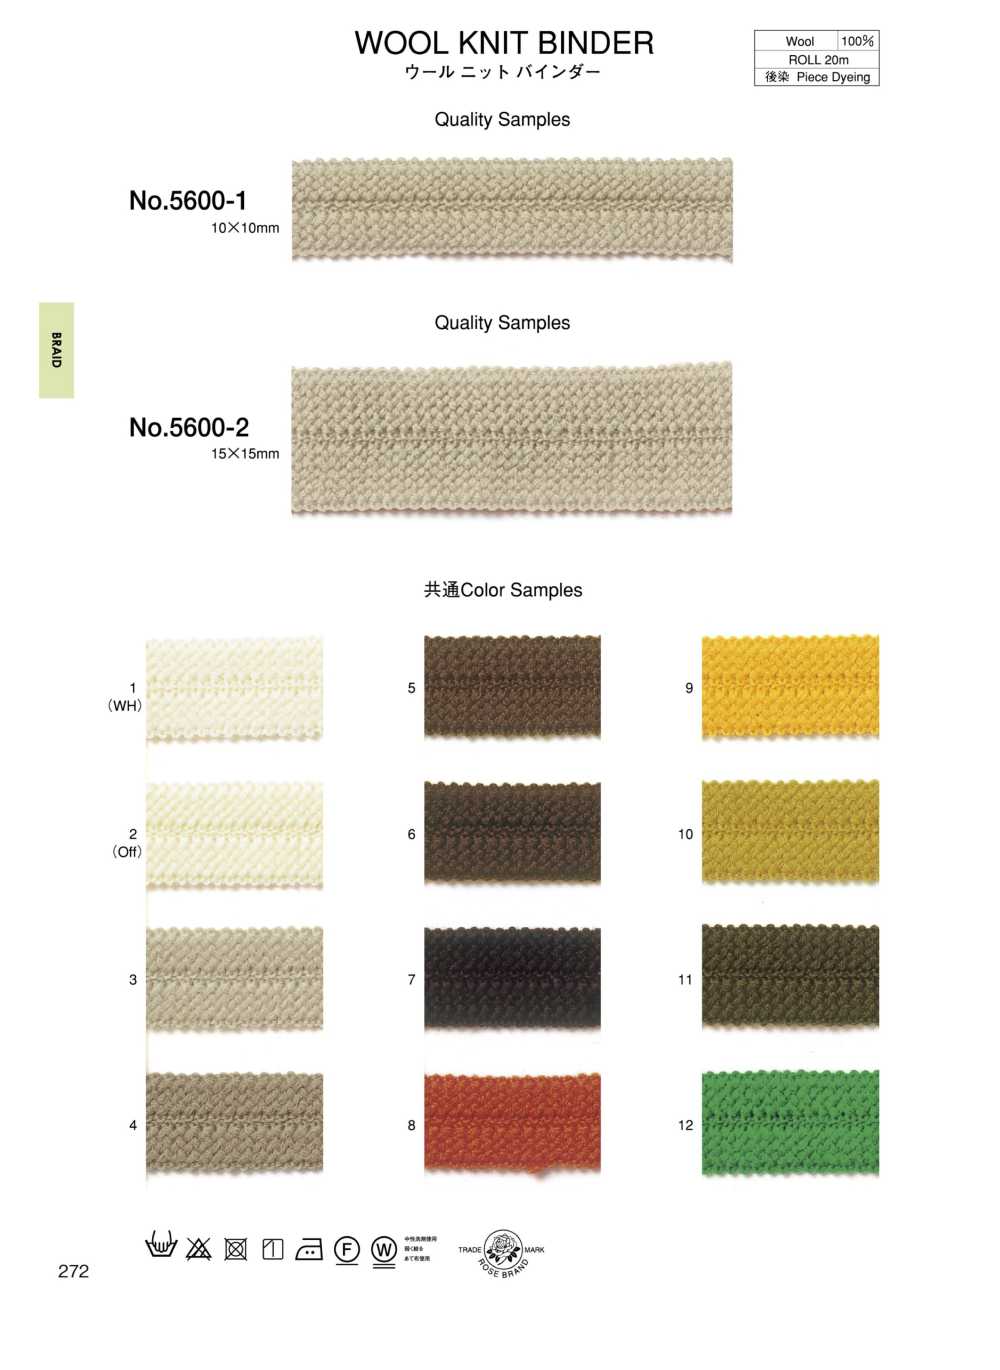 5600-1 Wool Knit Binder[Ribbon Tape Cord] ROSE BRAND (Marushin)